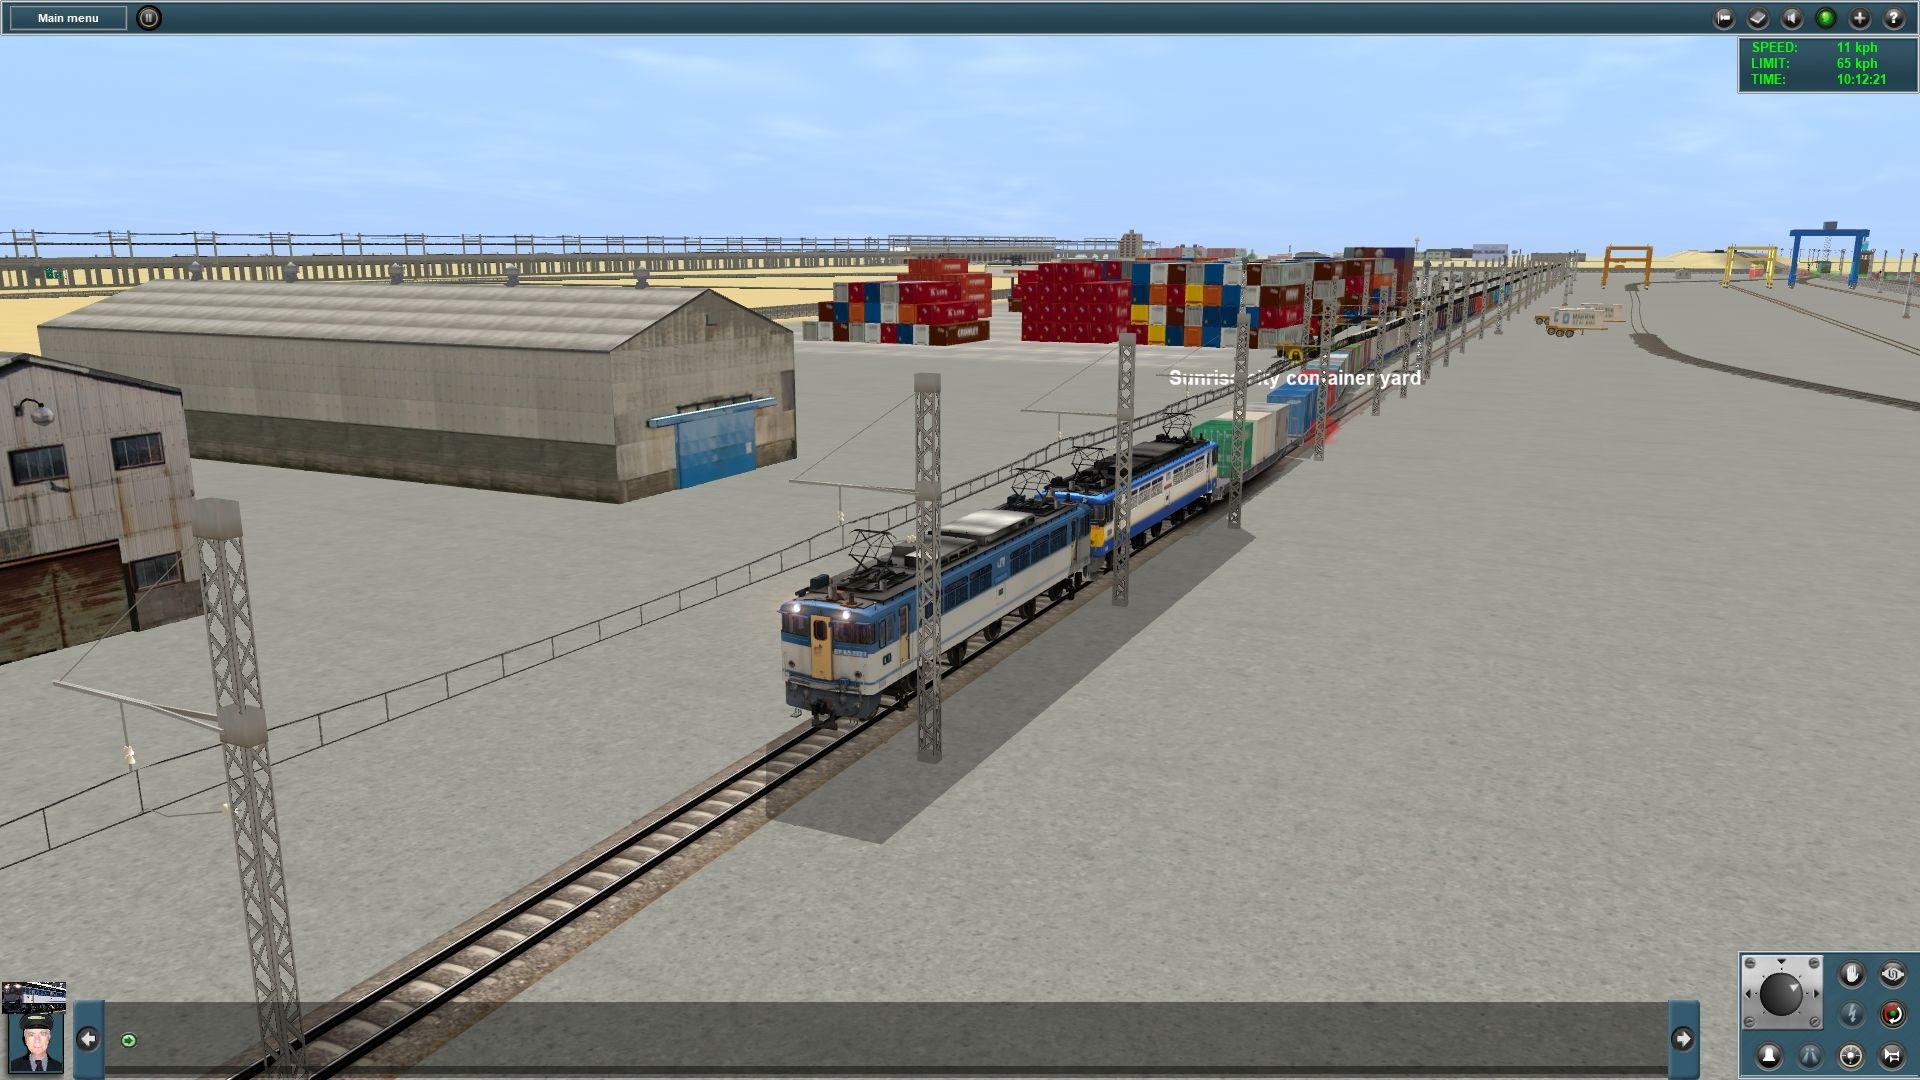 New-Kurotrick-JR-freight-moters-leaving-Dobbs-Island-continer-yard.jpg